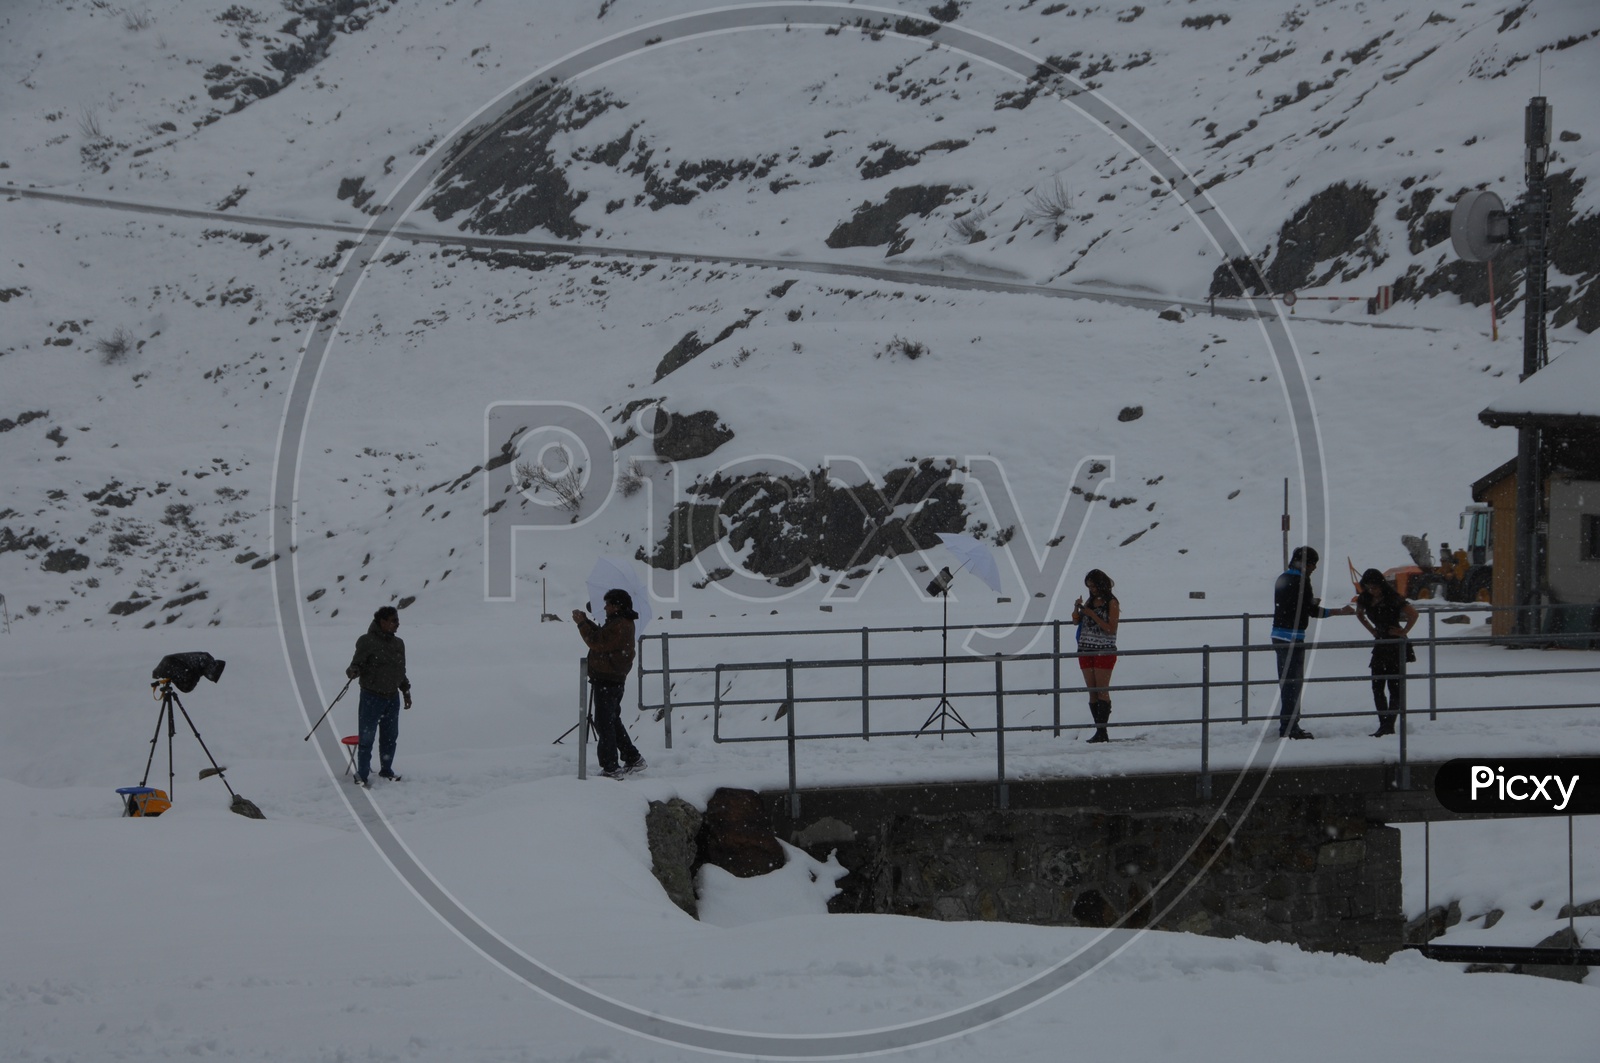 Film Crew Shooting In Snow filled MountainsIn Switzerland